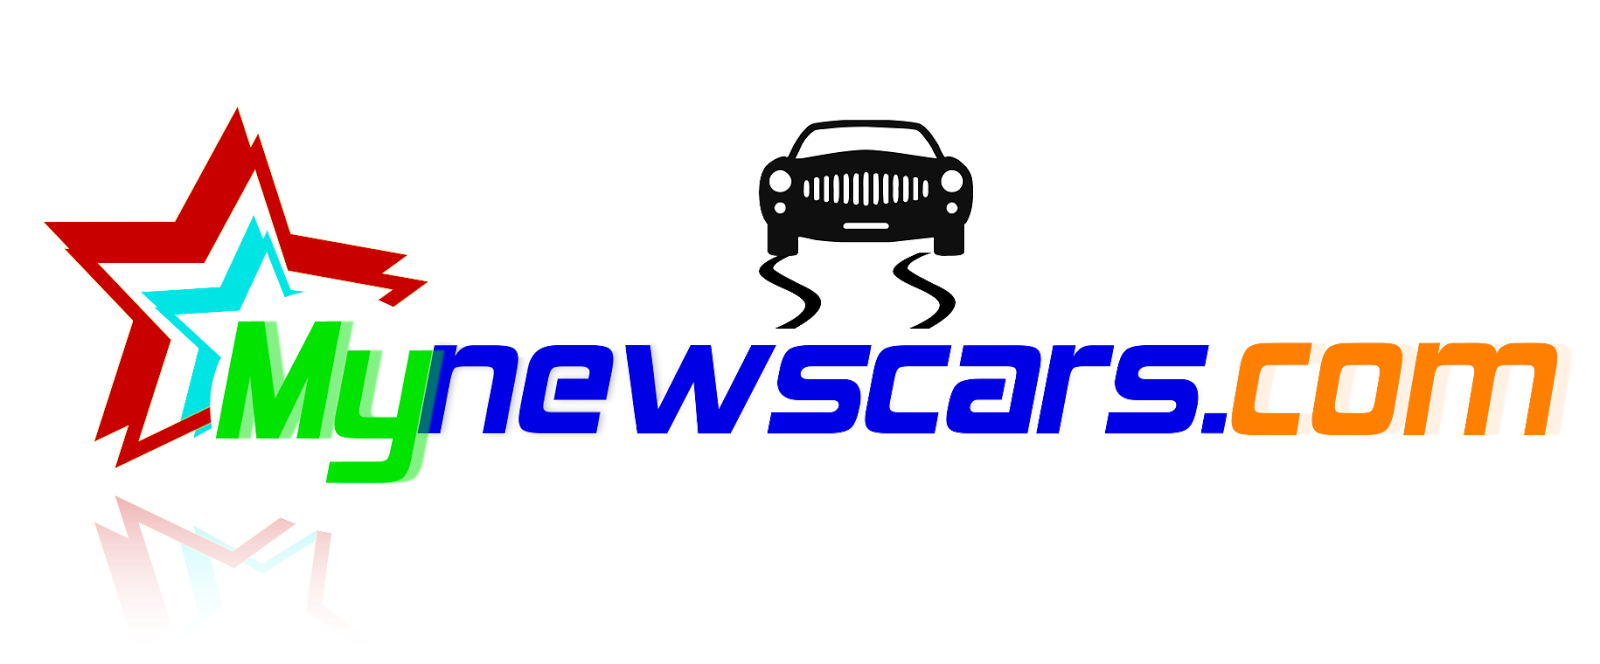 My News Cars